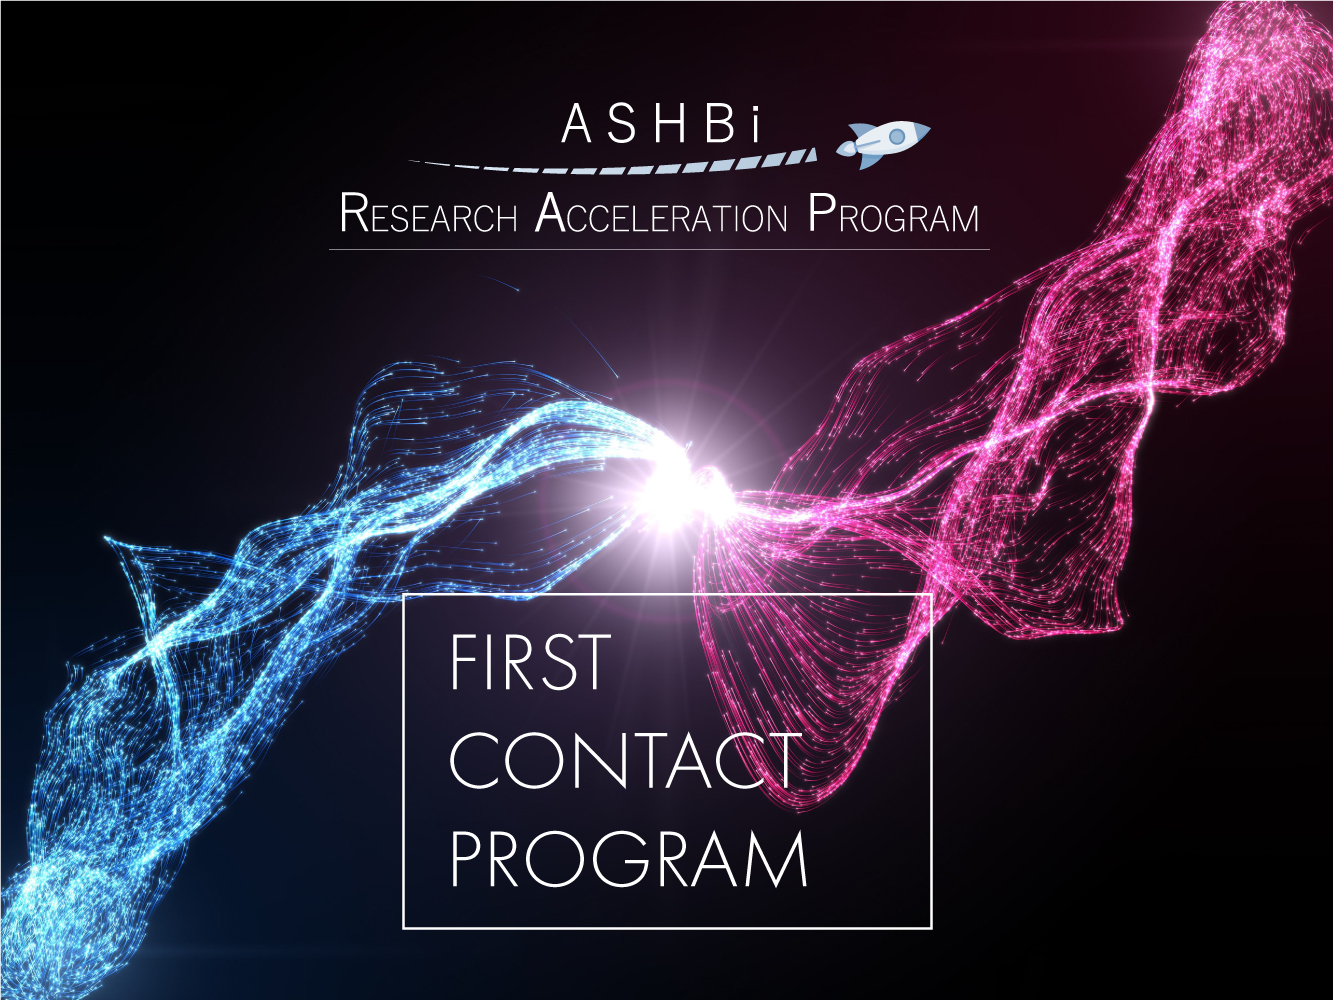 First Contact Program #6 (Dr.  Takafumi Ichikawa)